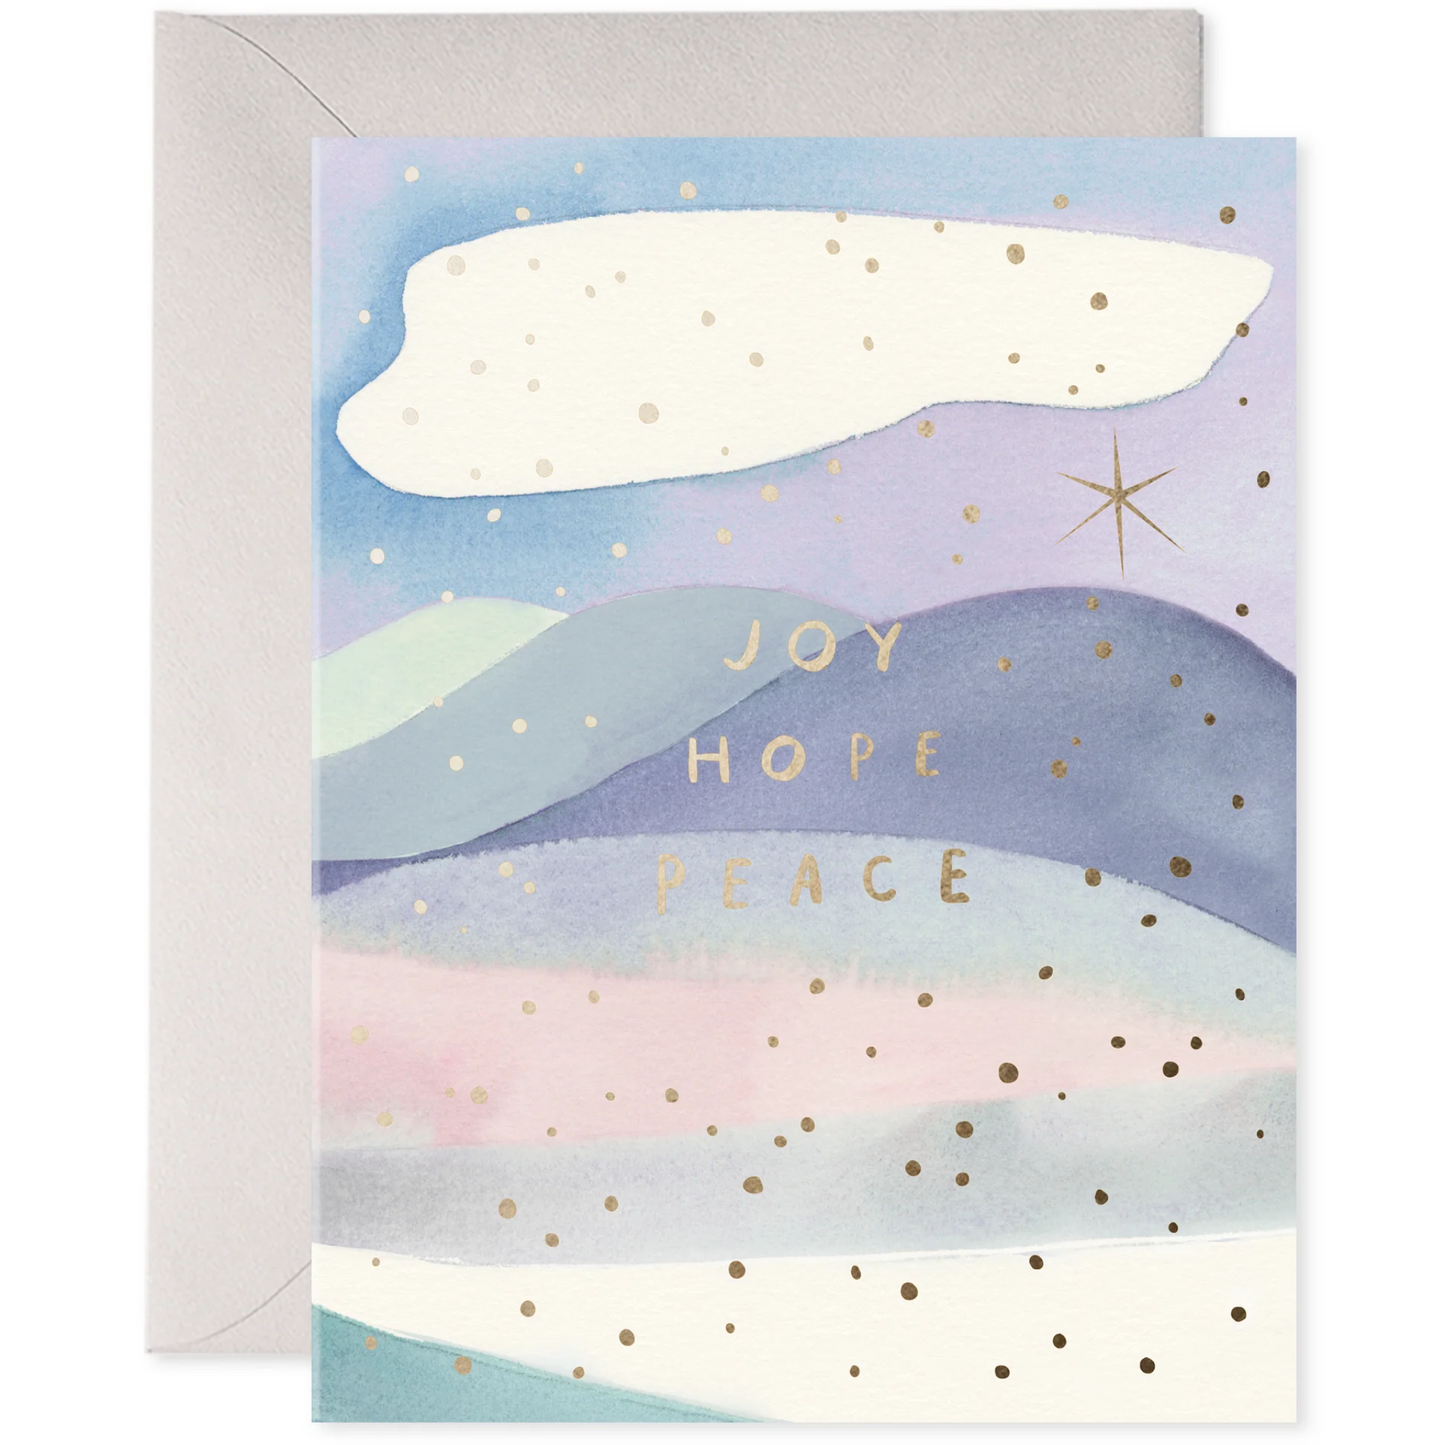 Joy Hope Peace Cards (Boxed Set of 6)